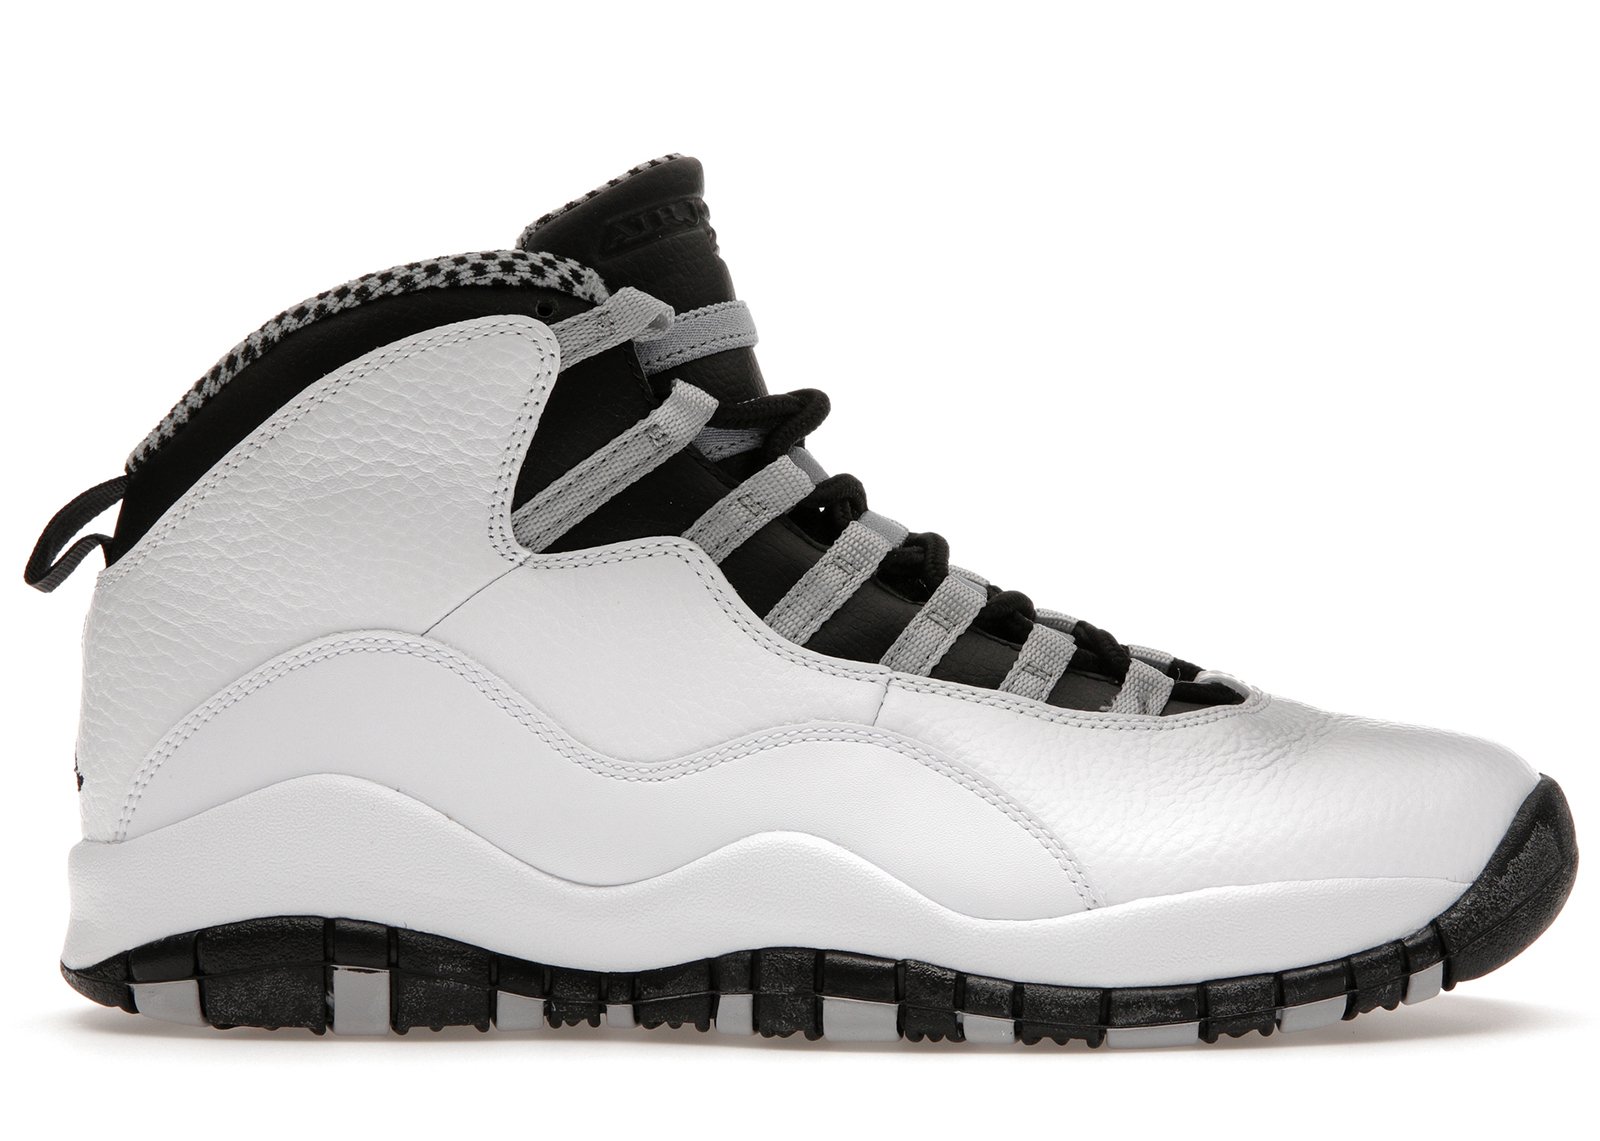 Jordan 10 Retro Steel (2013) sneakers